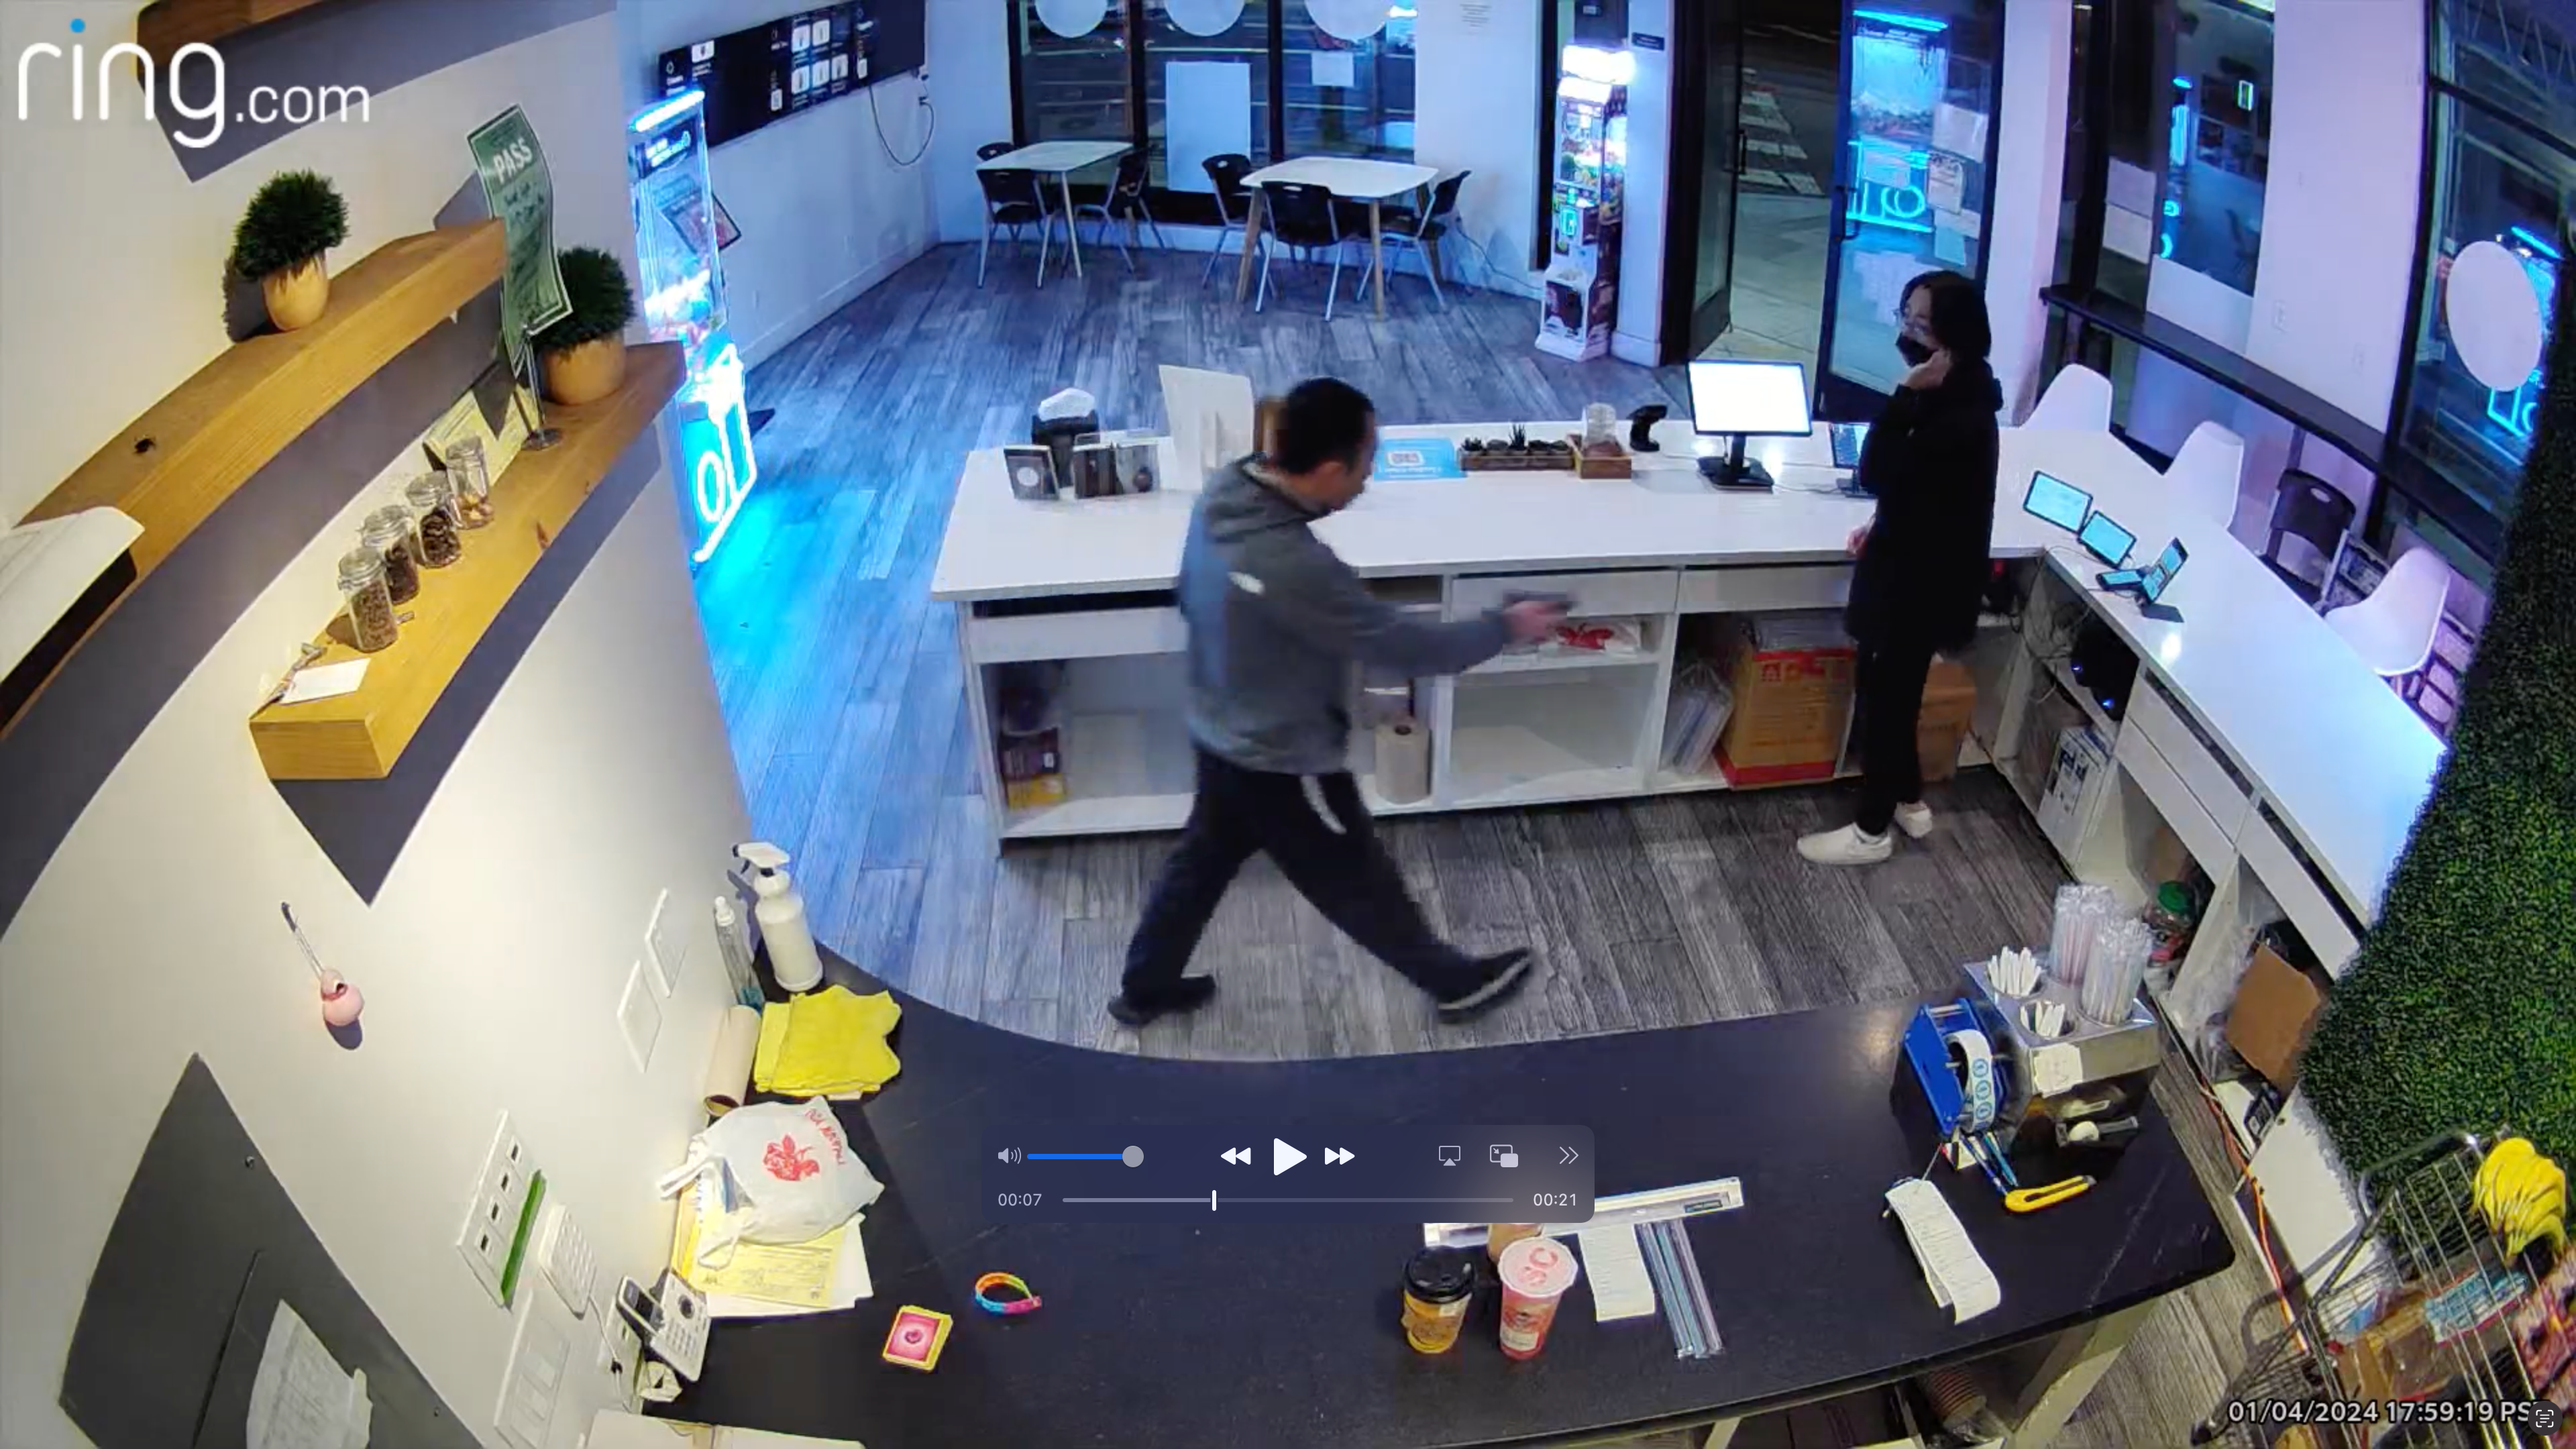 A man with a gun walks behind a counter toward a worker at a cafe.